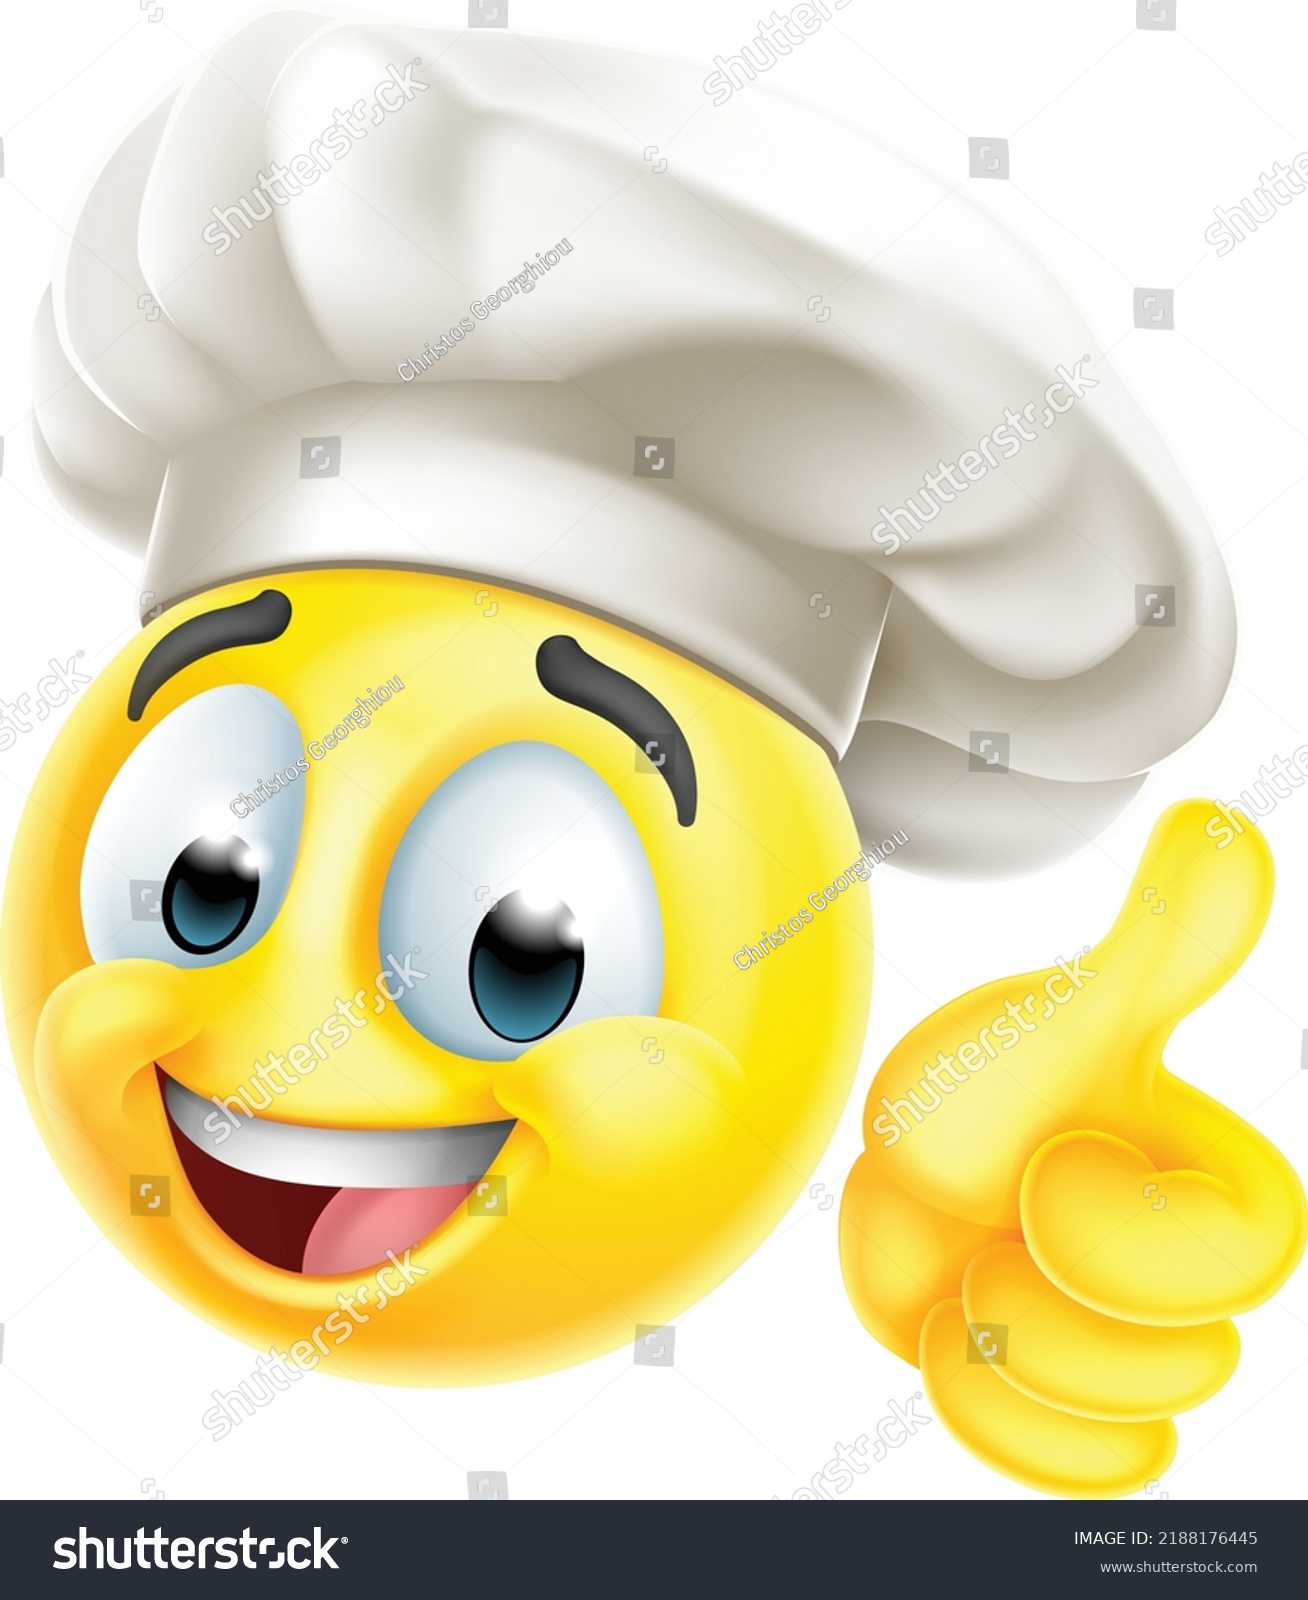 11,454 Emoticon Chef Images, Stock Photos & Vectors | Shutterstock